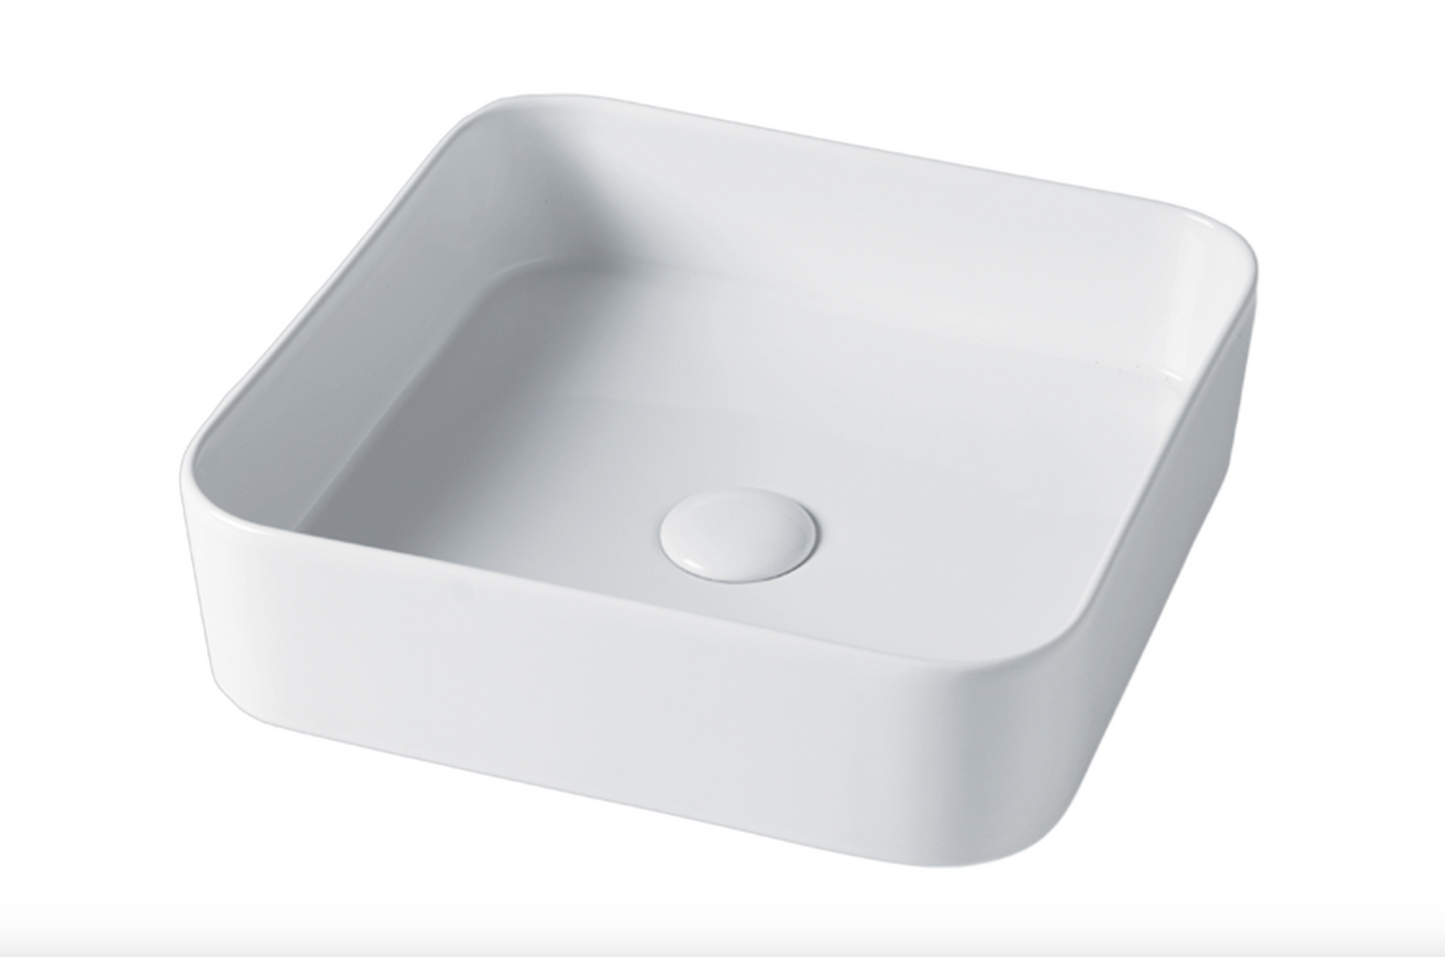 Modul40Quadro countertop ceramic washbasin